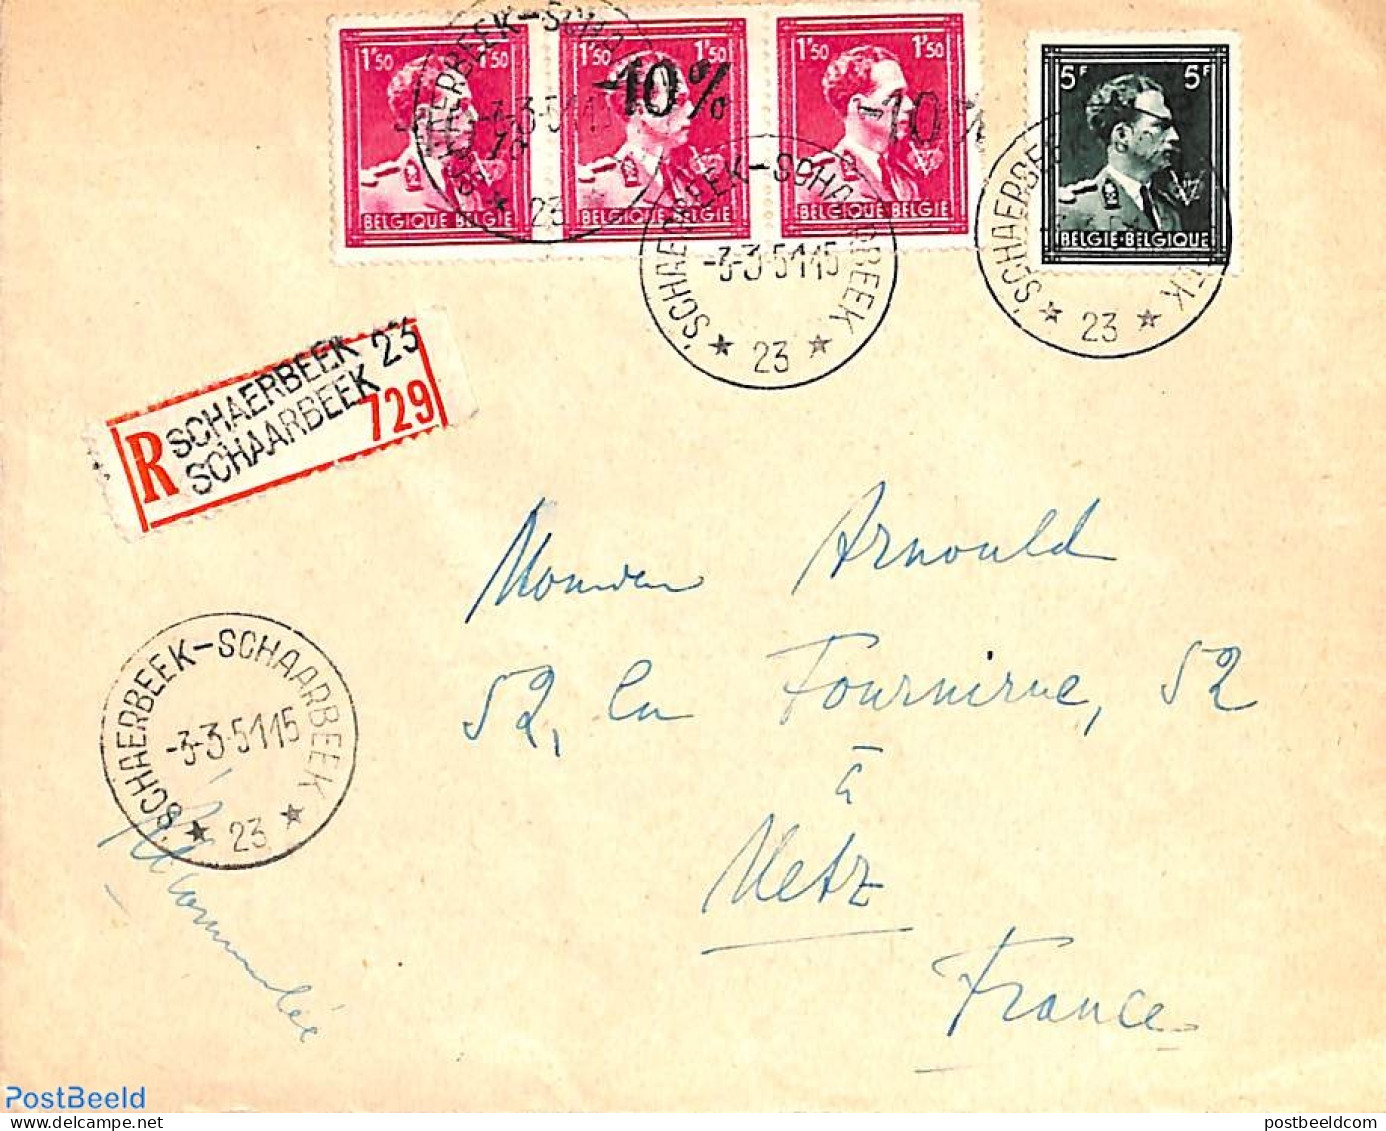 Belgium 1951 Registered Letter From Schaarbeek With -10% Overprints, Postal History - Lettres & Documents